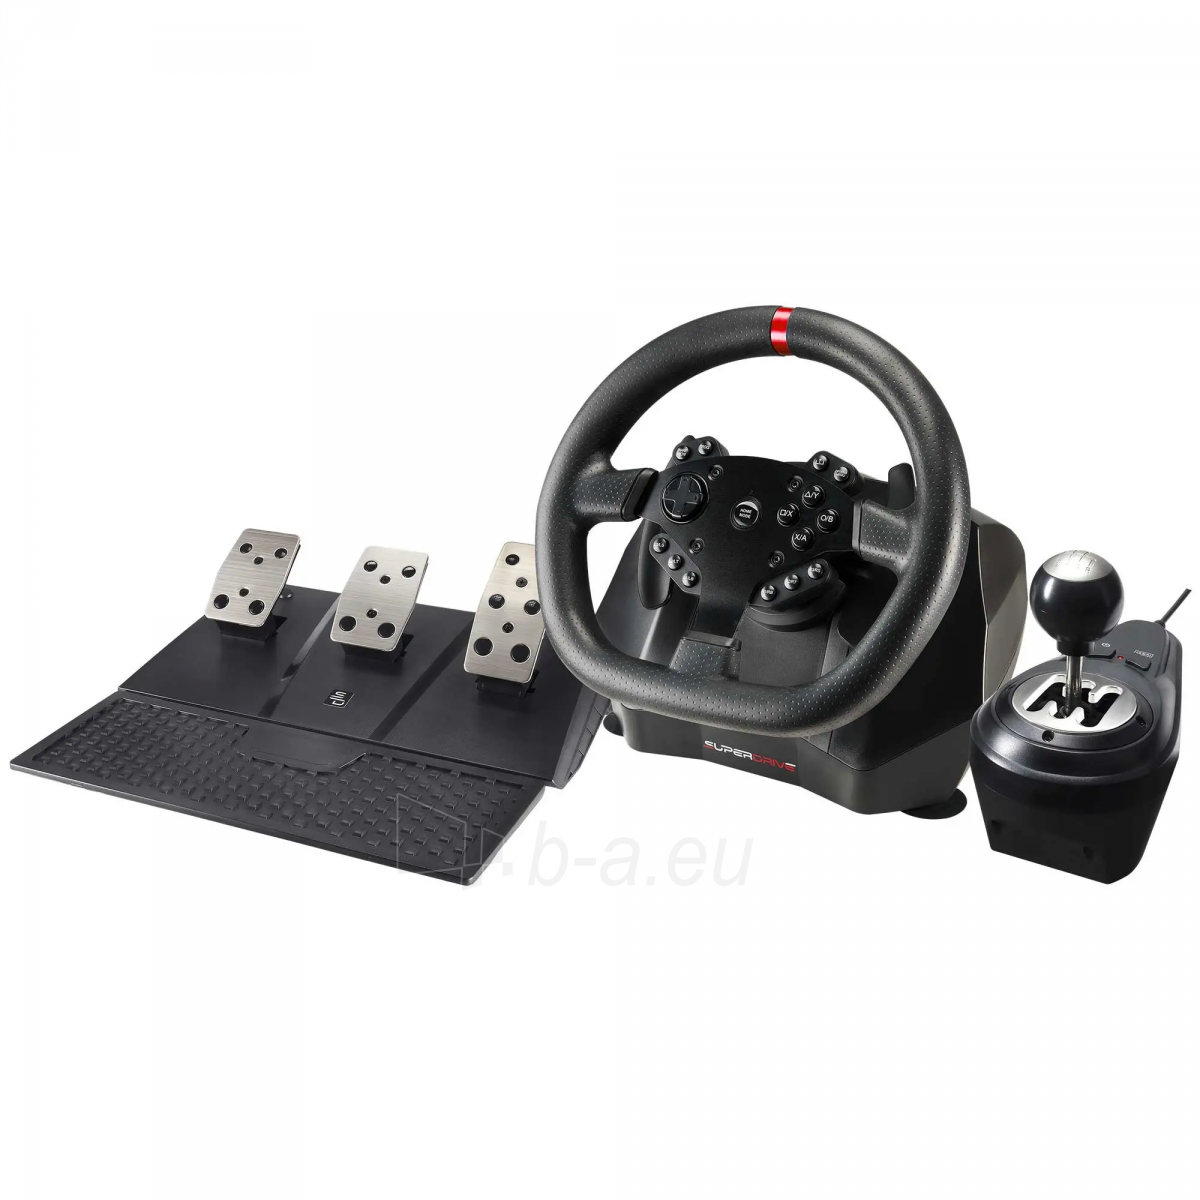 Vairalazdė Subsonic Superdrive GS 950-X Racing Wheel (PC/PS4/XONE/XSX) paveikslėlis 1 iš 10